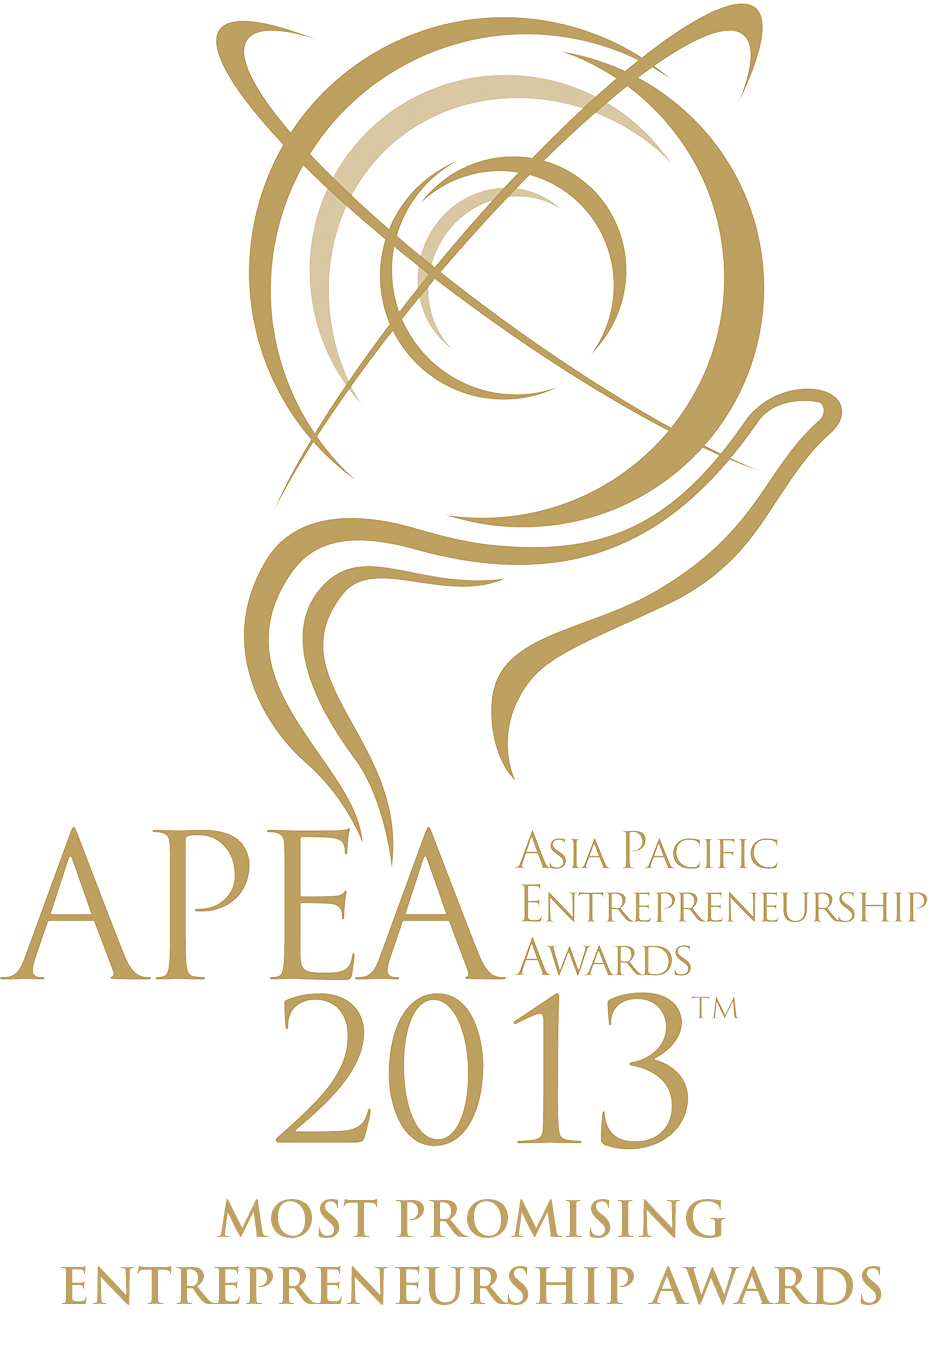 Asia Pacific Enterprise Asia Asia Awards